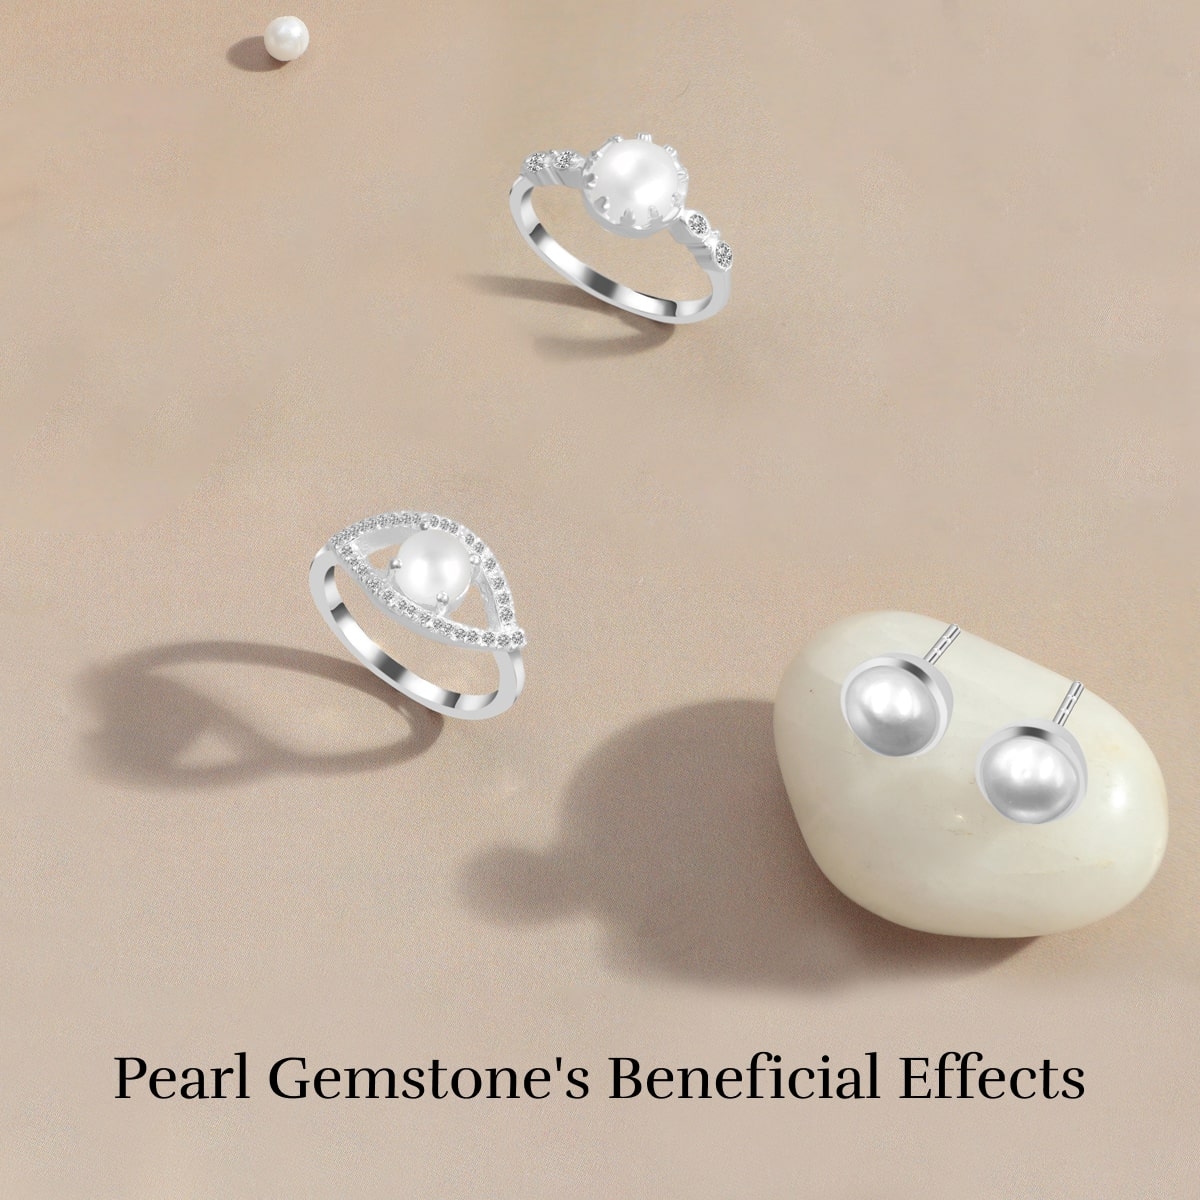 Benefits of Pearl Gemstone